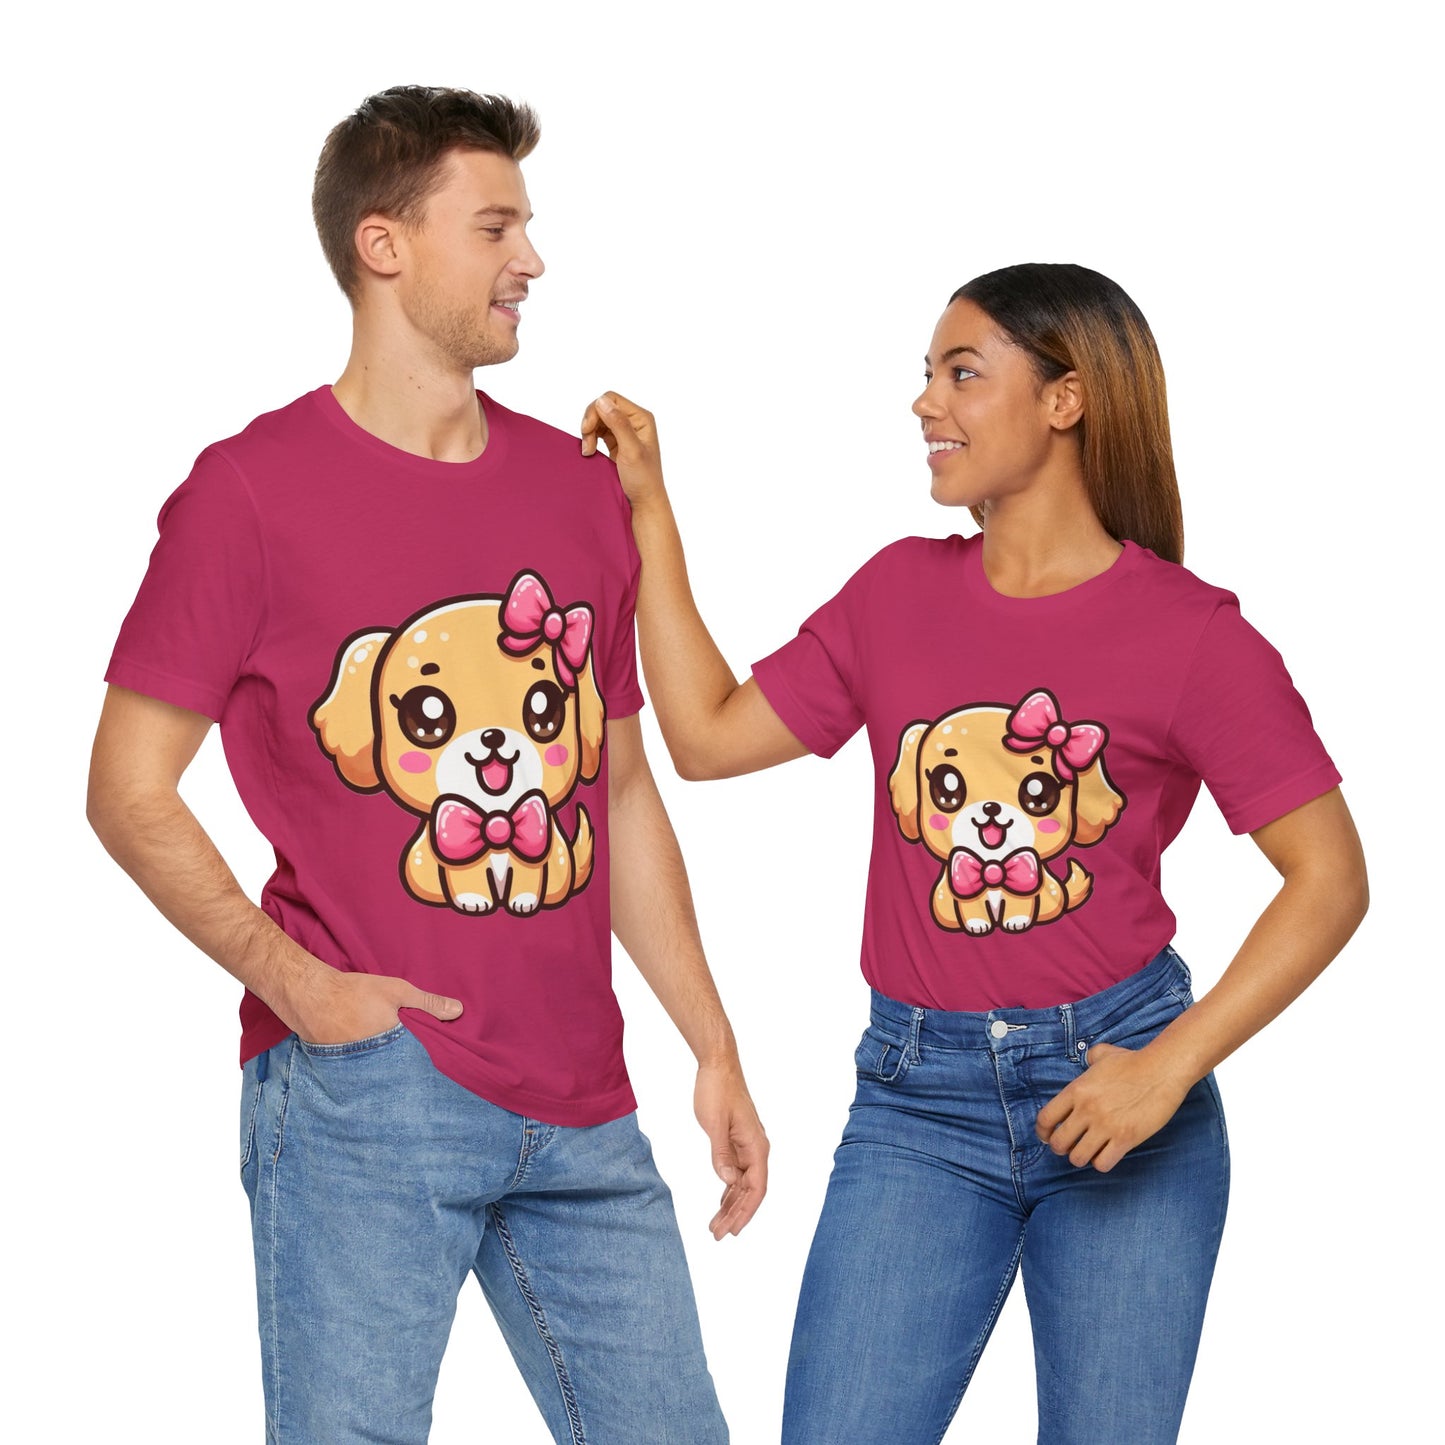 Adorable Kawaii Golden Labrador T-Shirt: Express Your Love for Cute Pups!